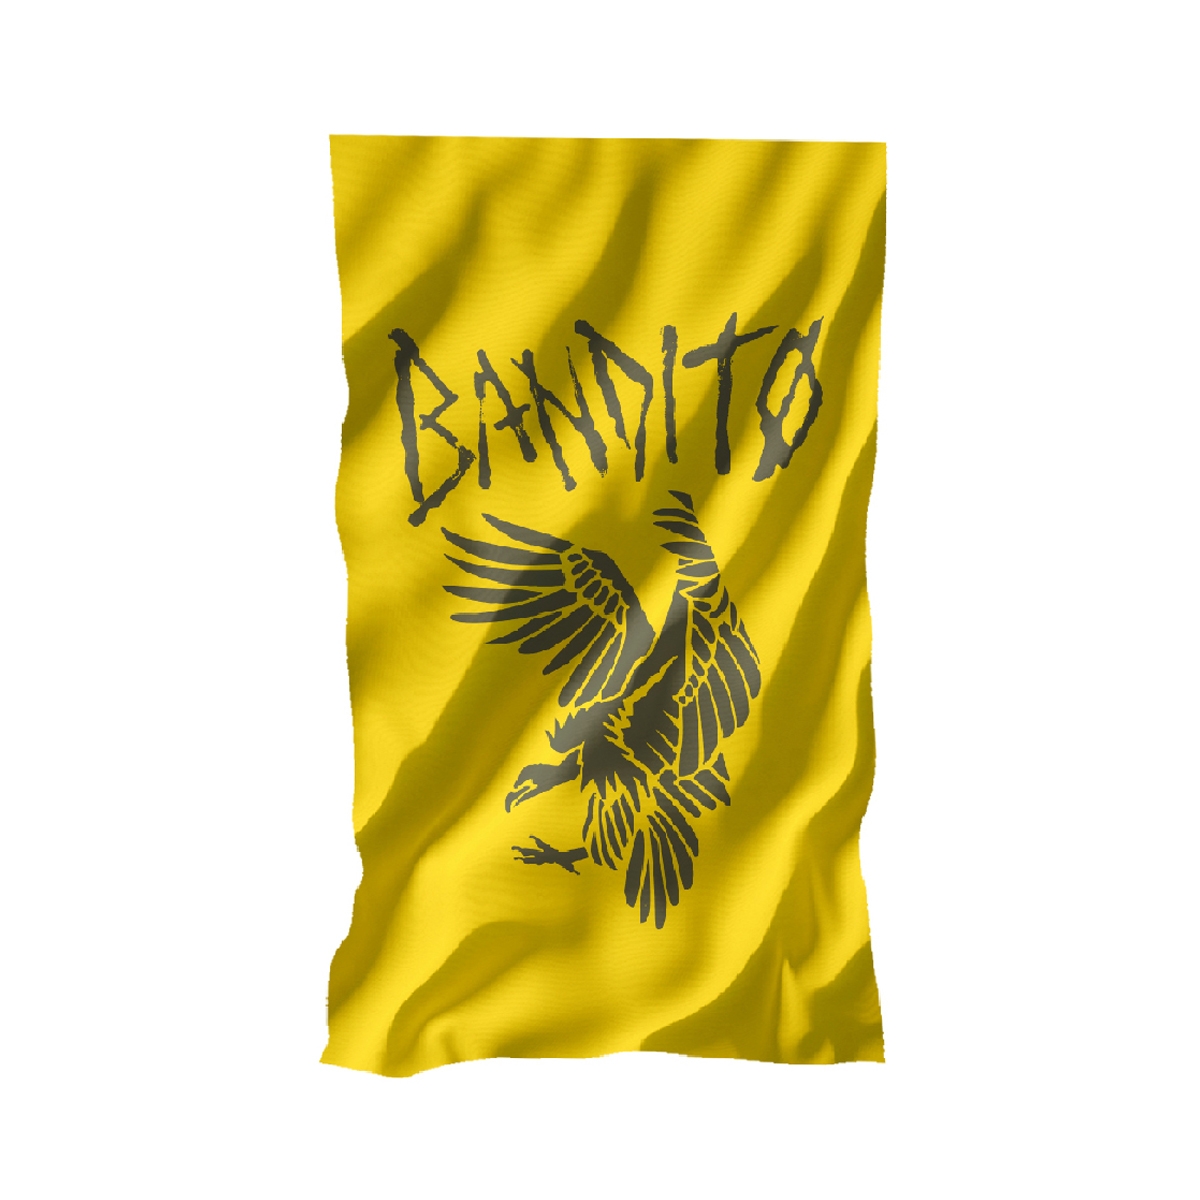 Bandito Flag  Twenty One Pilots Official Store